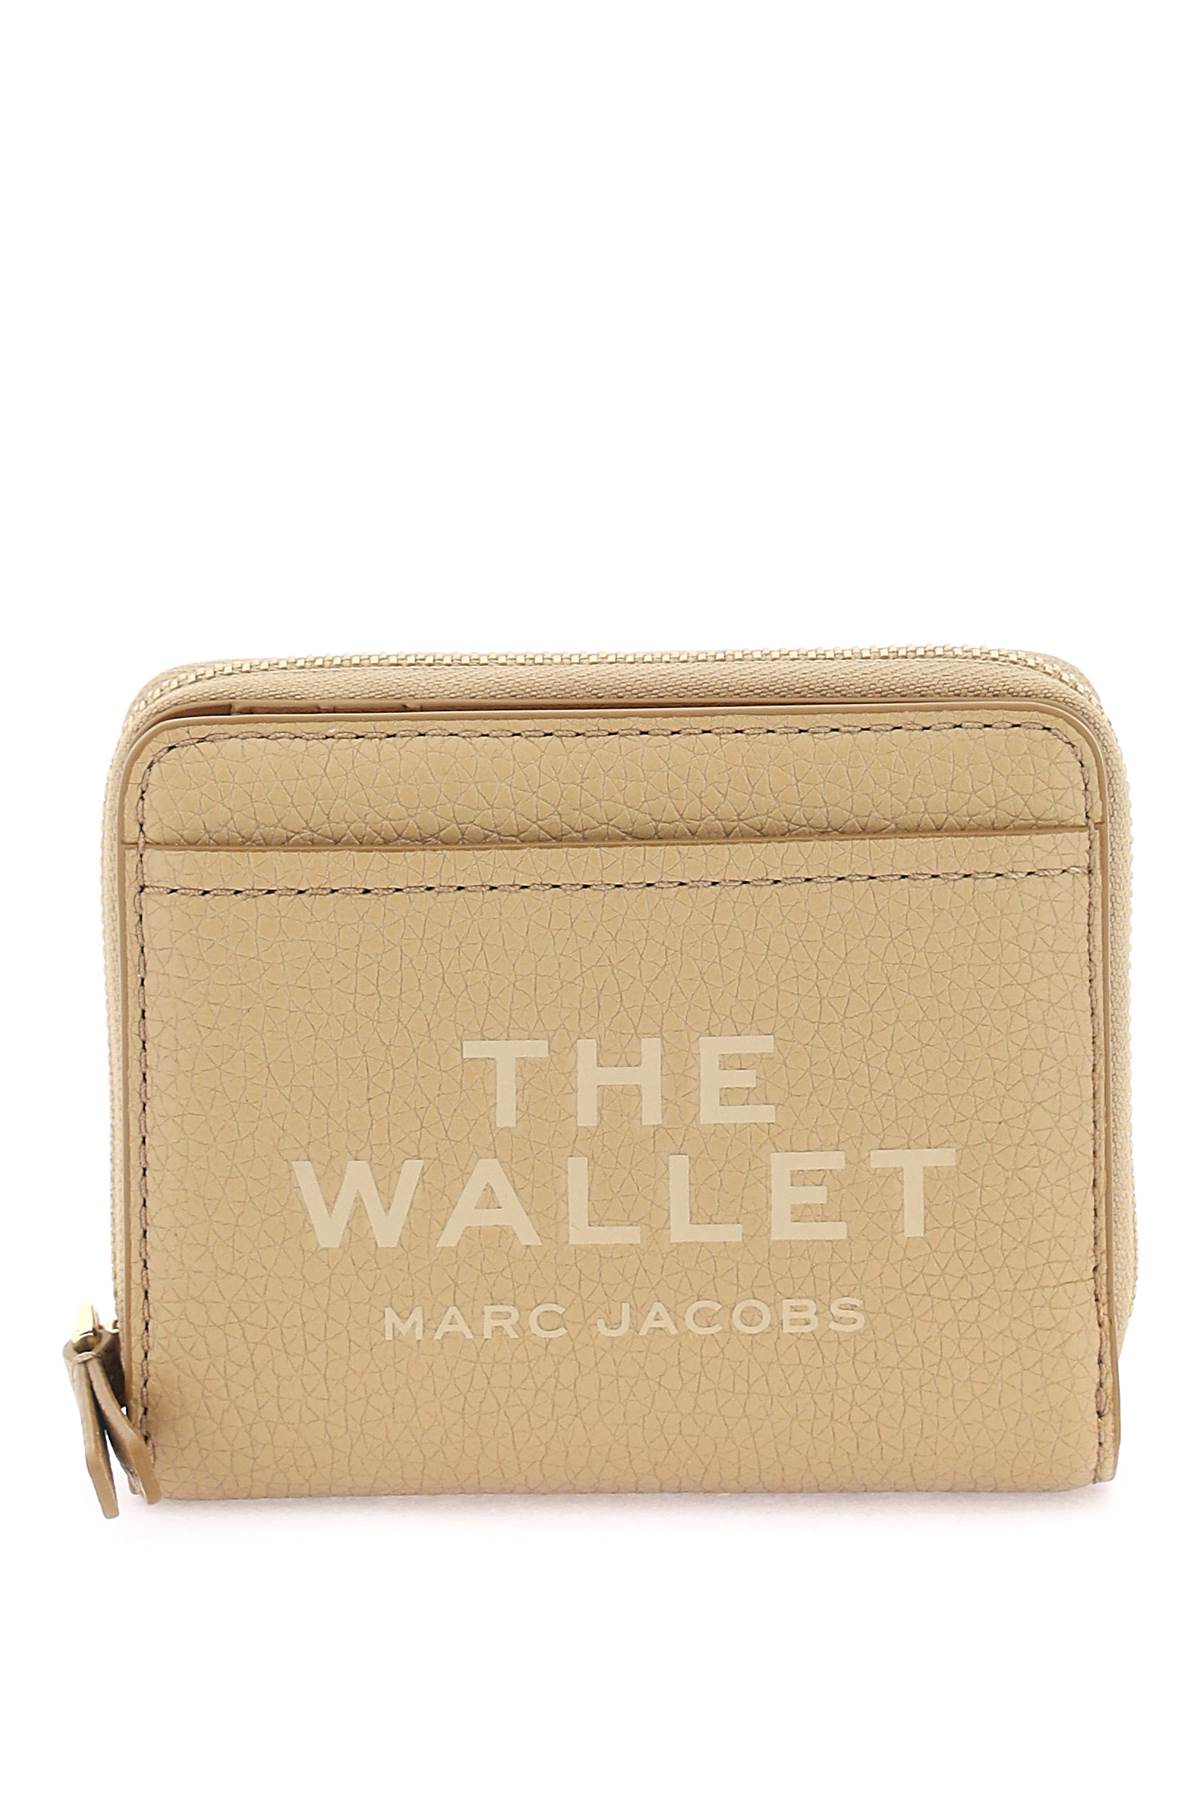 Marc jacobs portafoglio the leather mini compact wallet-0